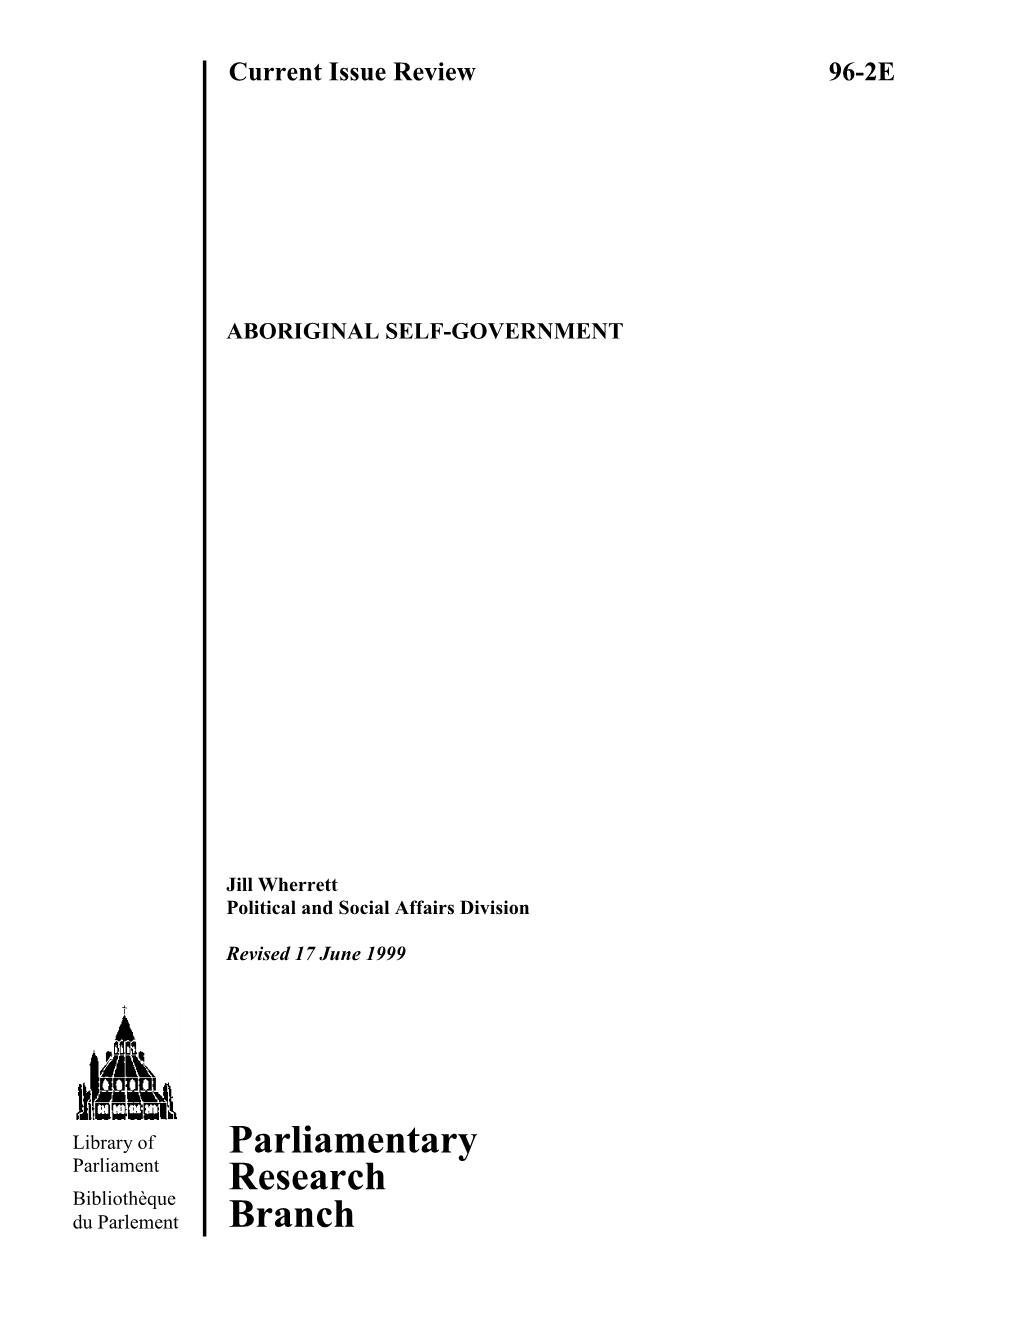 Aboriginal Self-Government